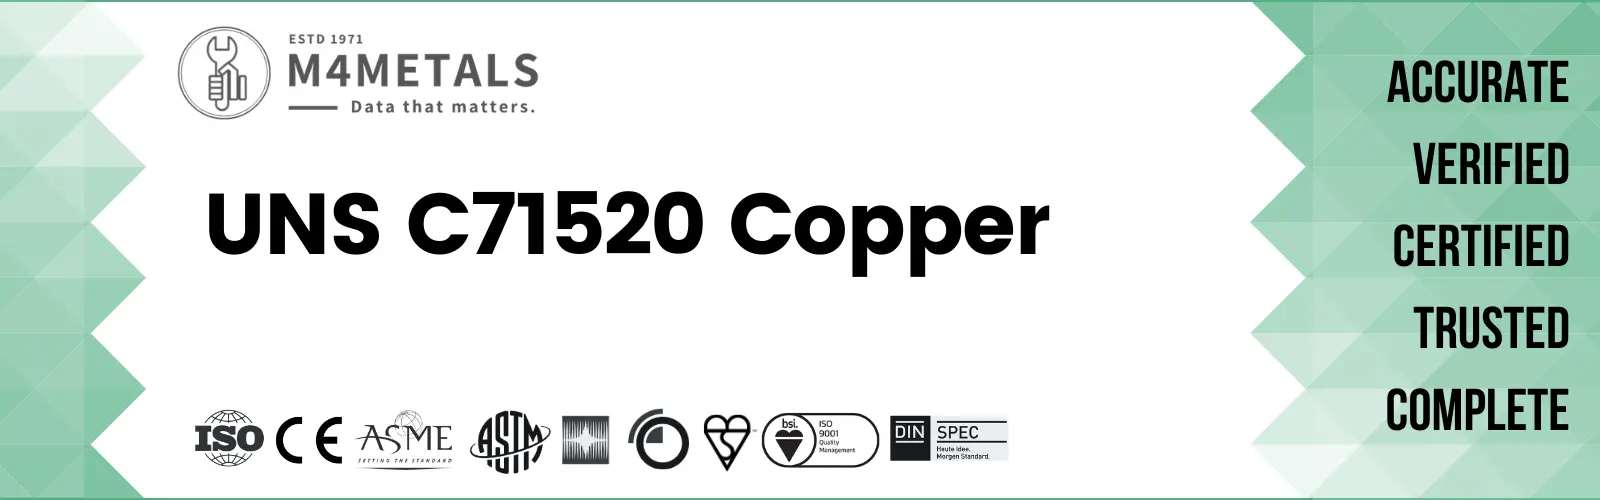 UNS C71520 Copper